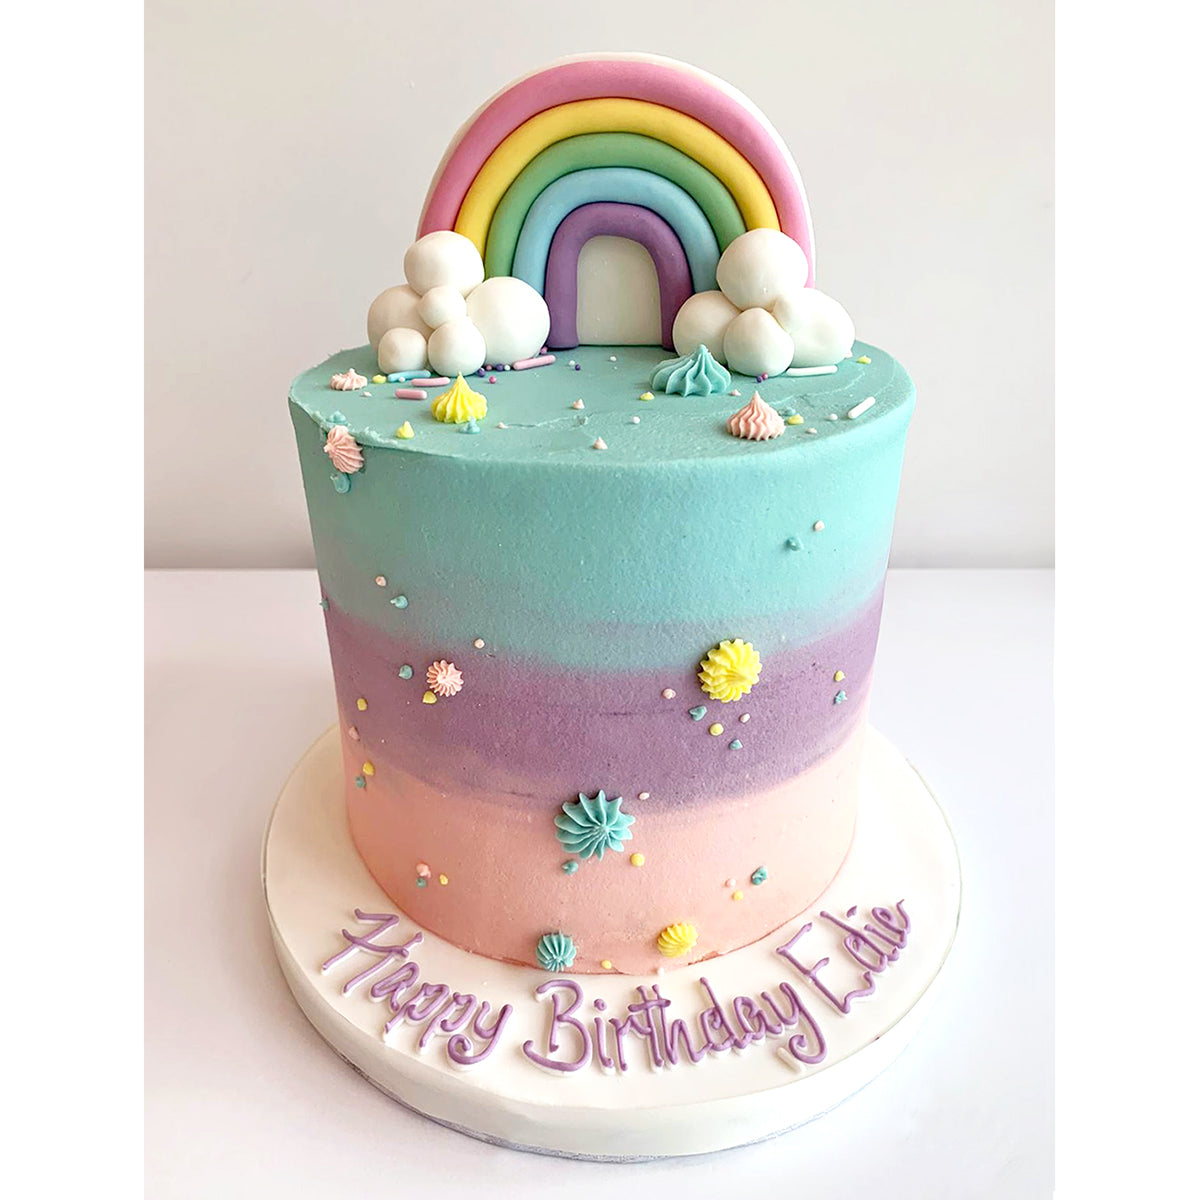 Gluten Free 'Wish Upon a Rainbow' Celebration Cake